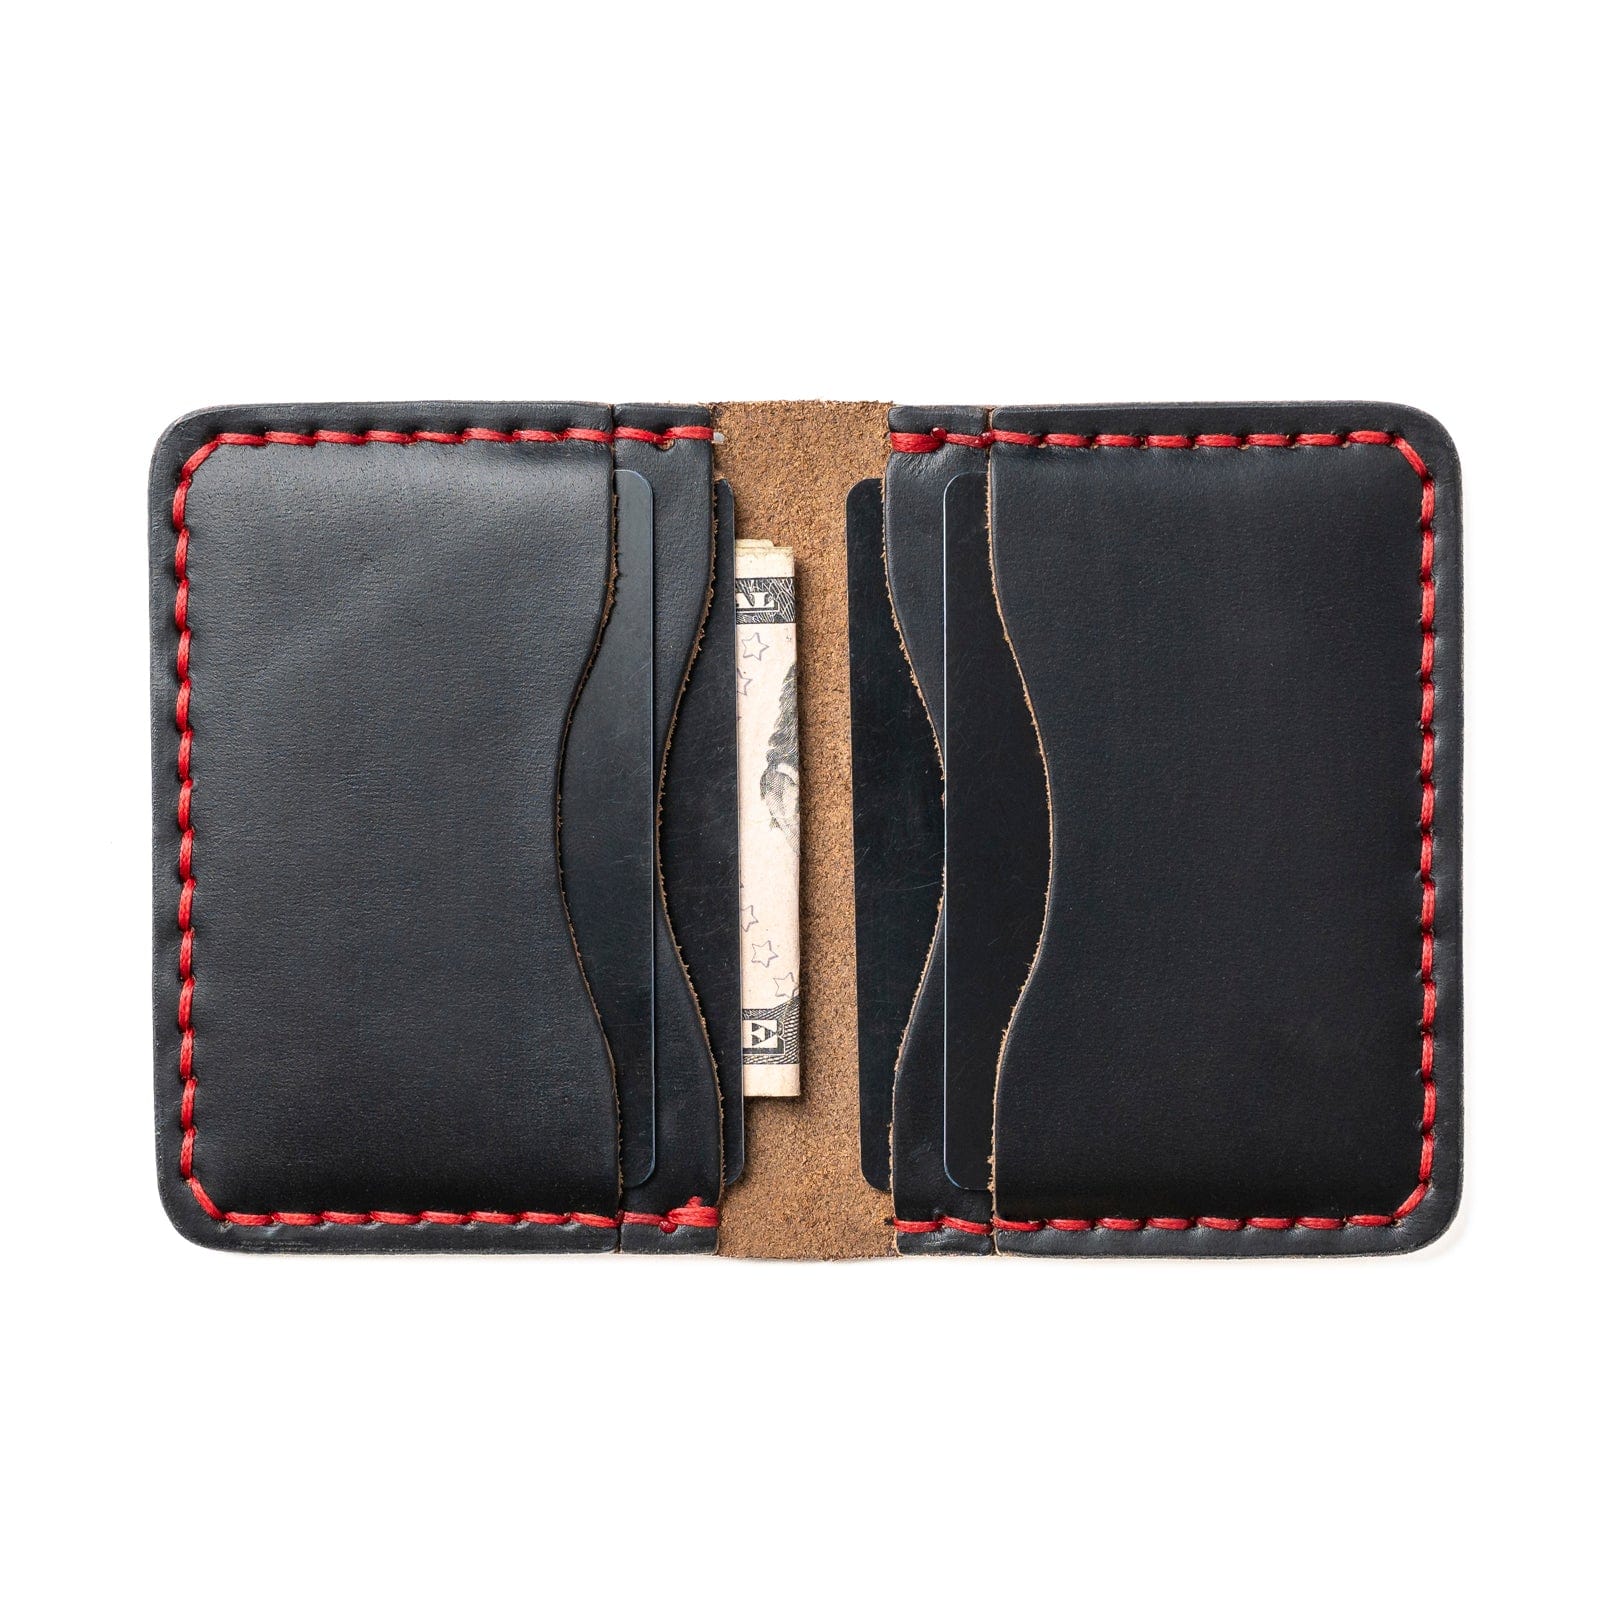 Leather 5 Card Wallet - Black